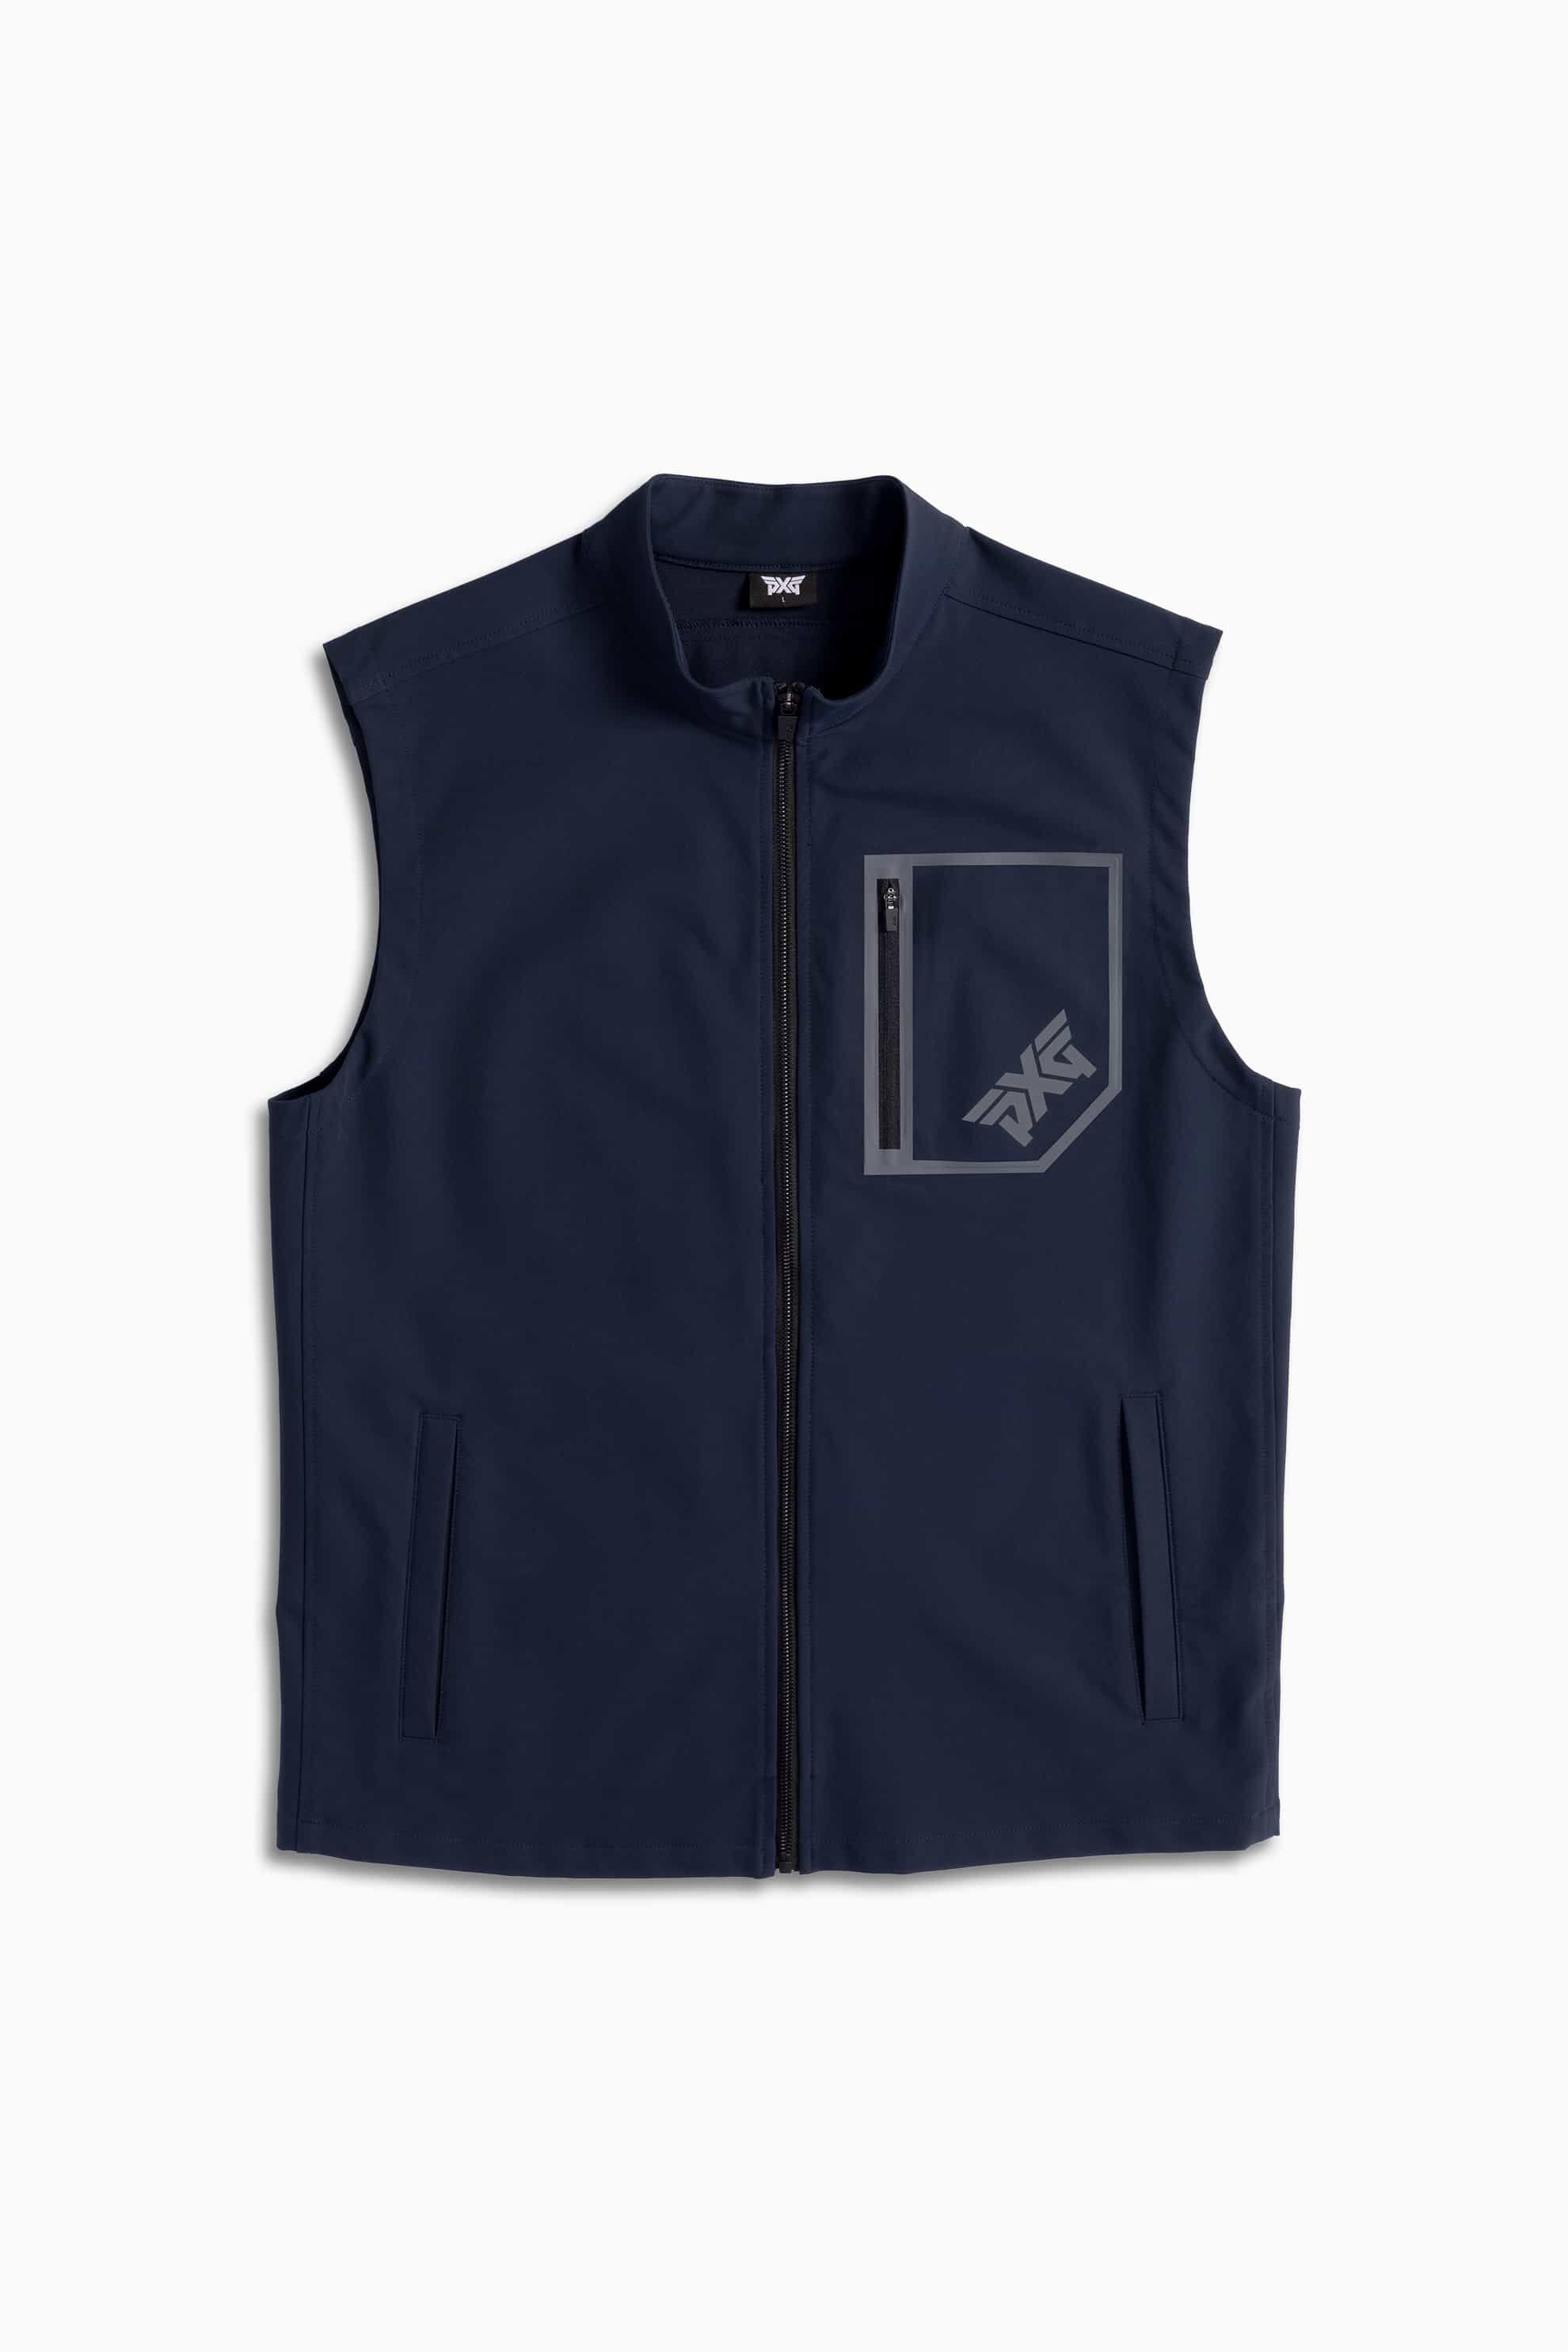 Shop Men's Golf ベスト- Full Zip Vests and More | PXG JP